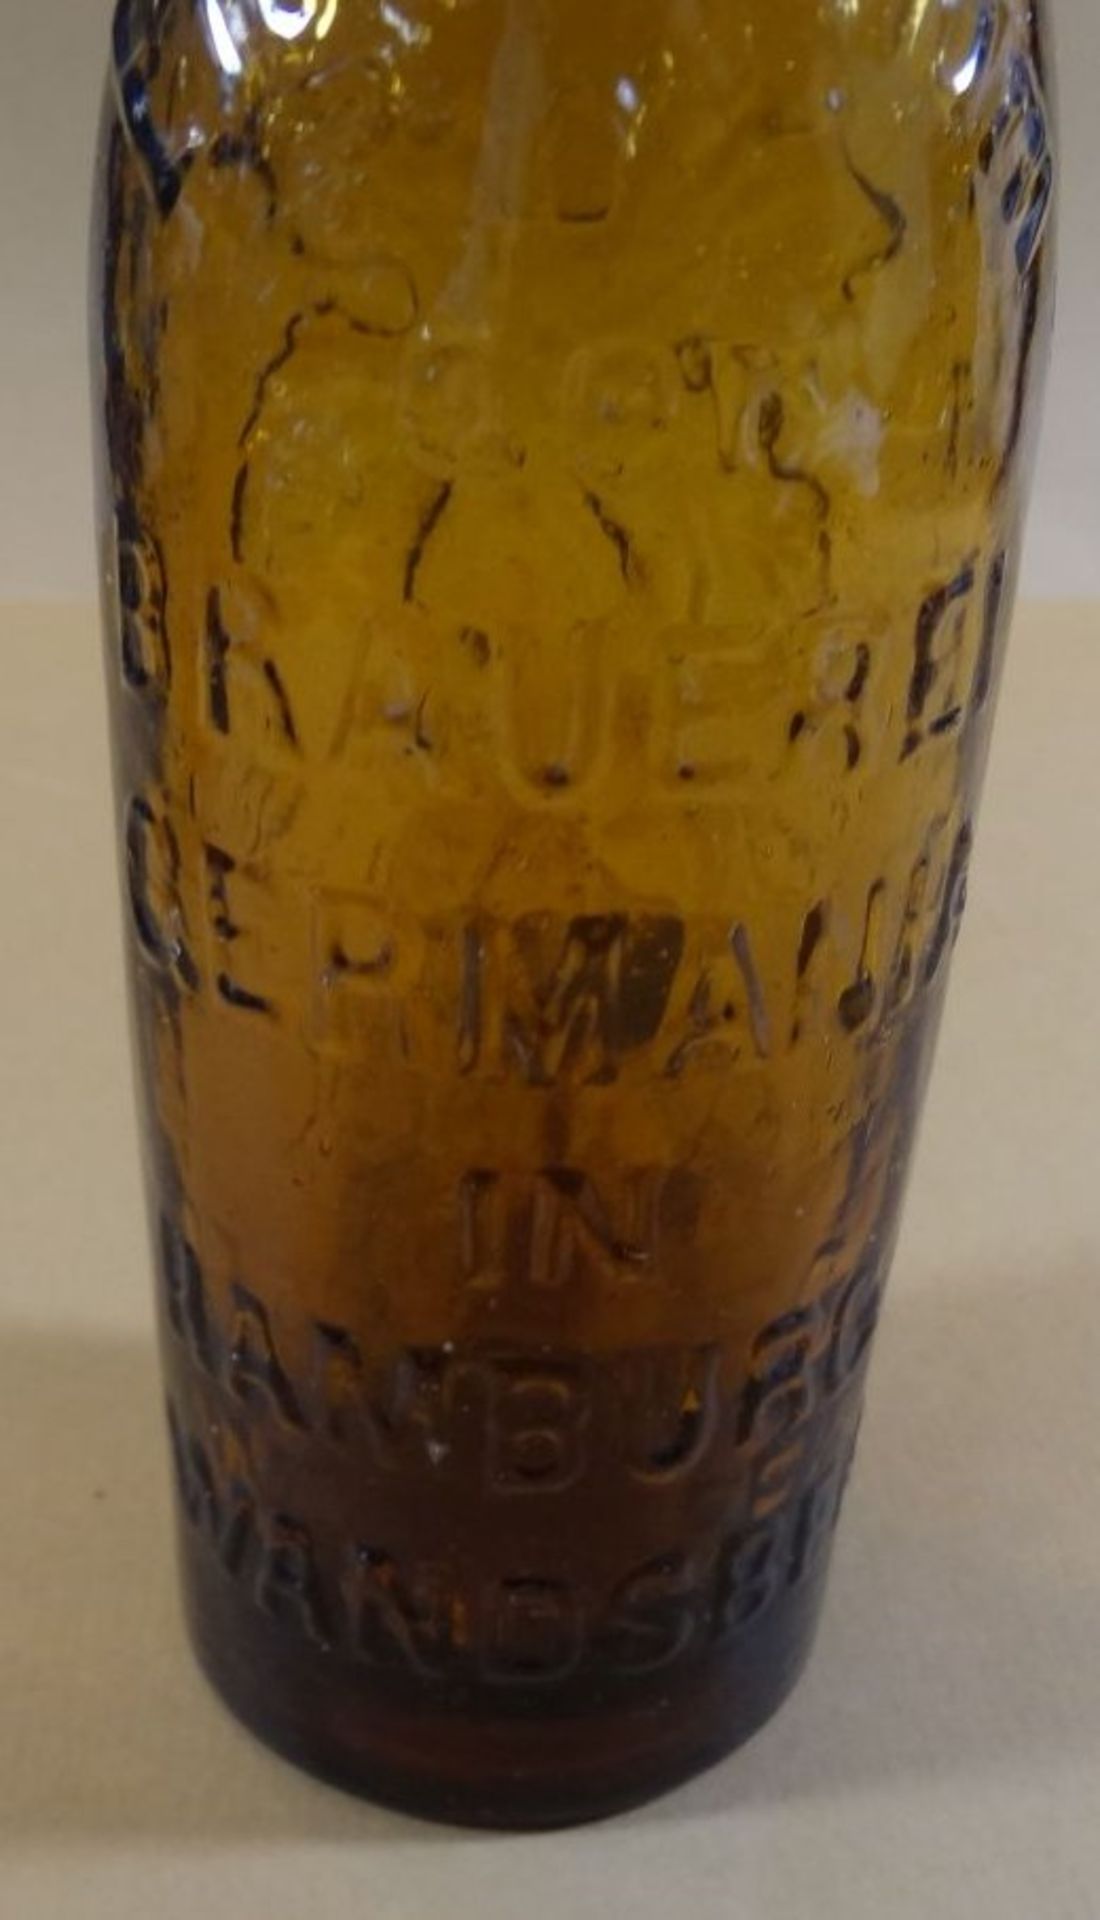 Bierflasche um 1900 "Germania Bier" Wandsbek, um 1900, H-26 cm - Image 2 of 6